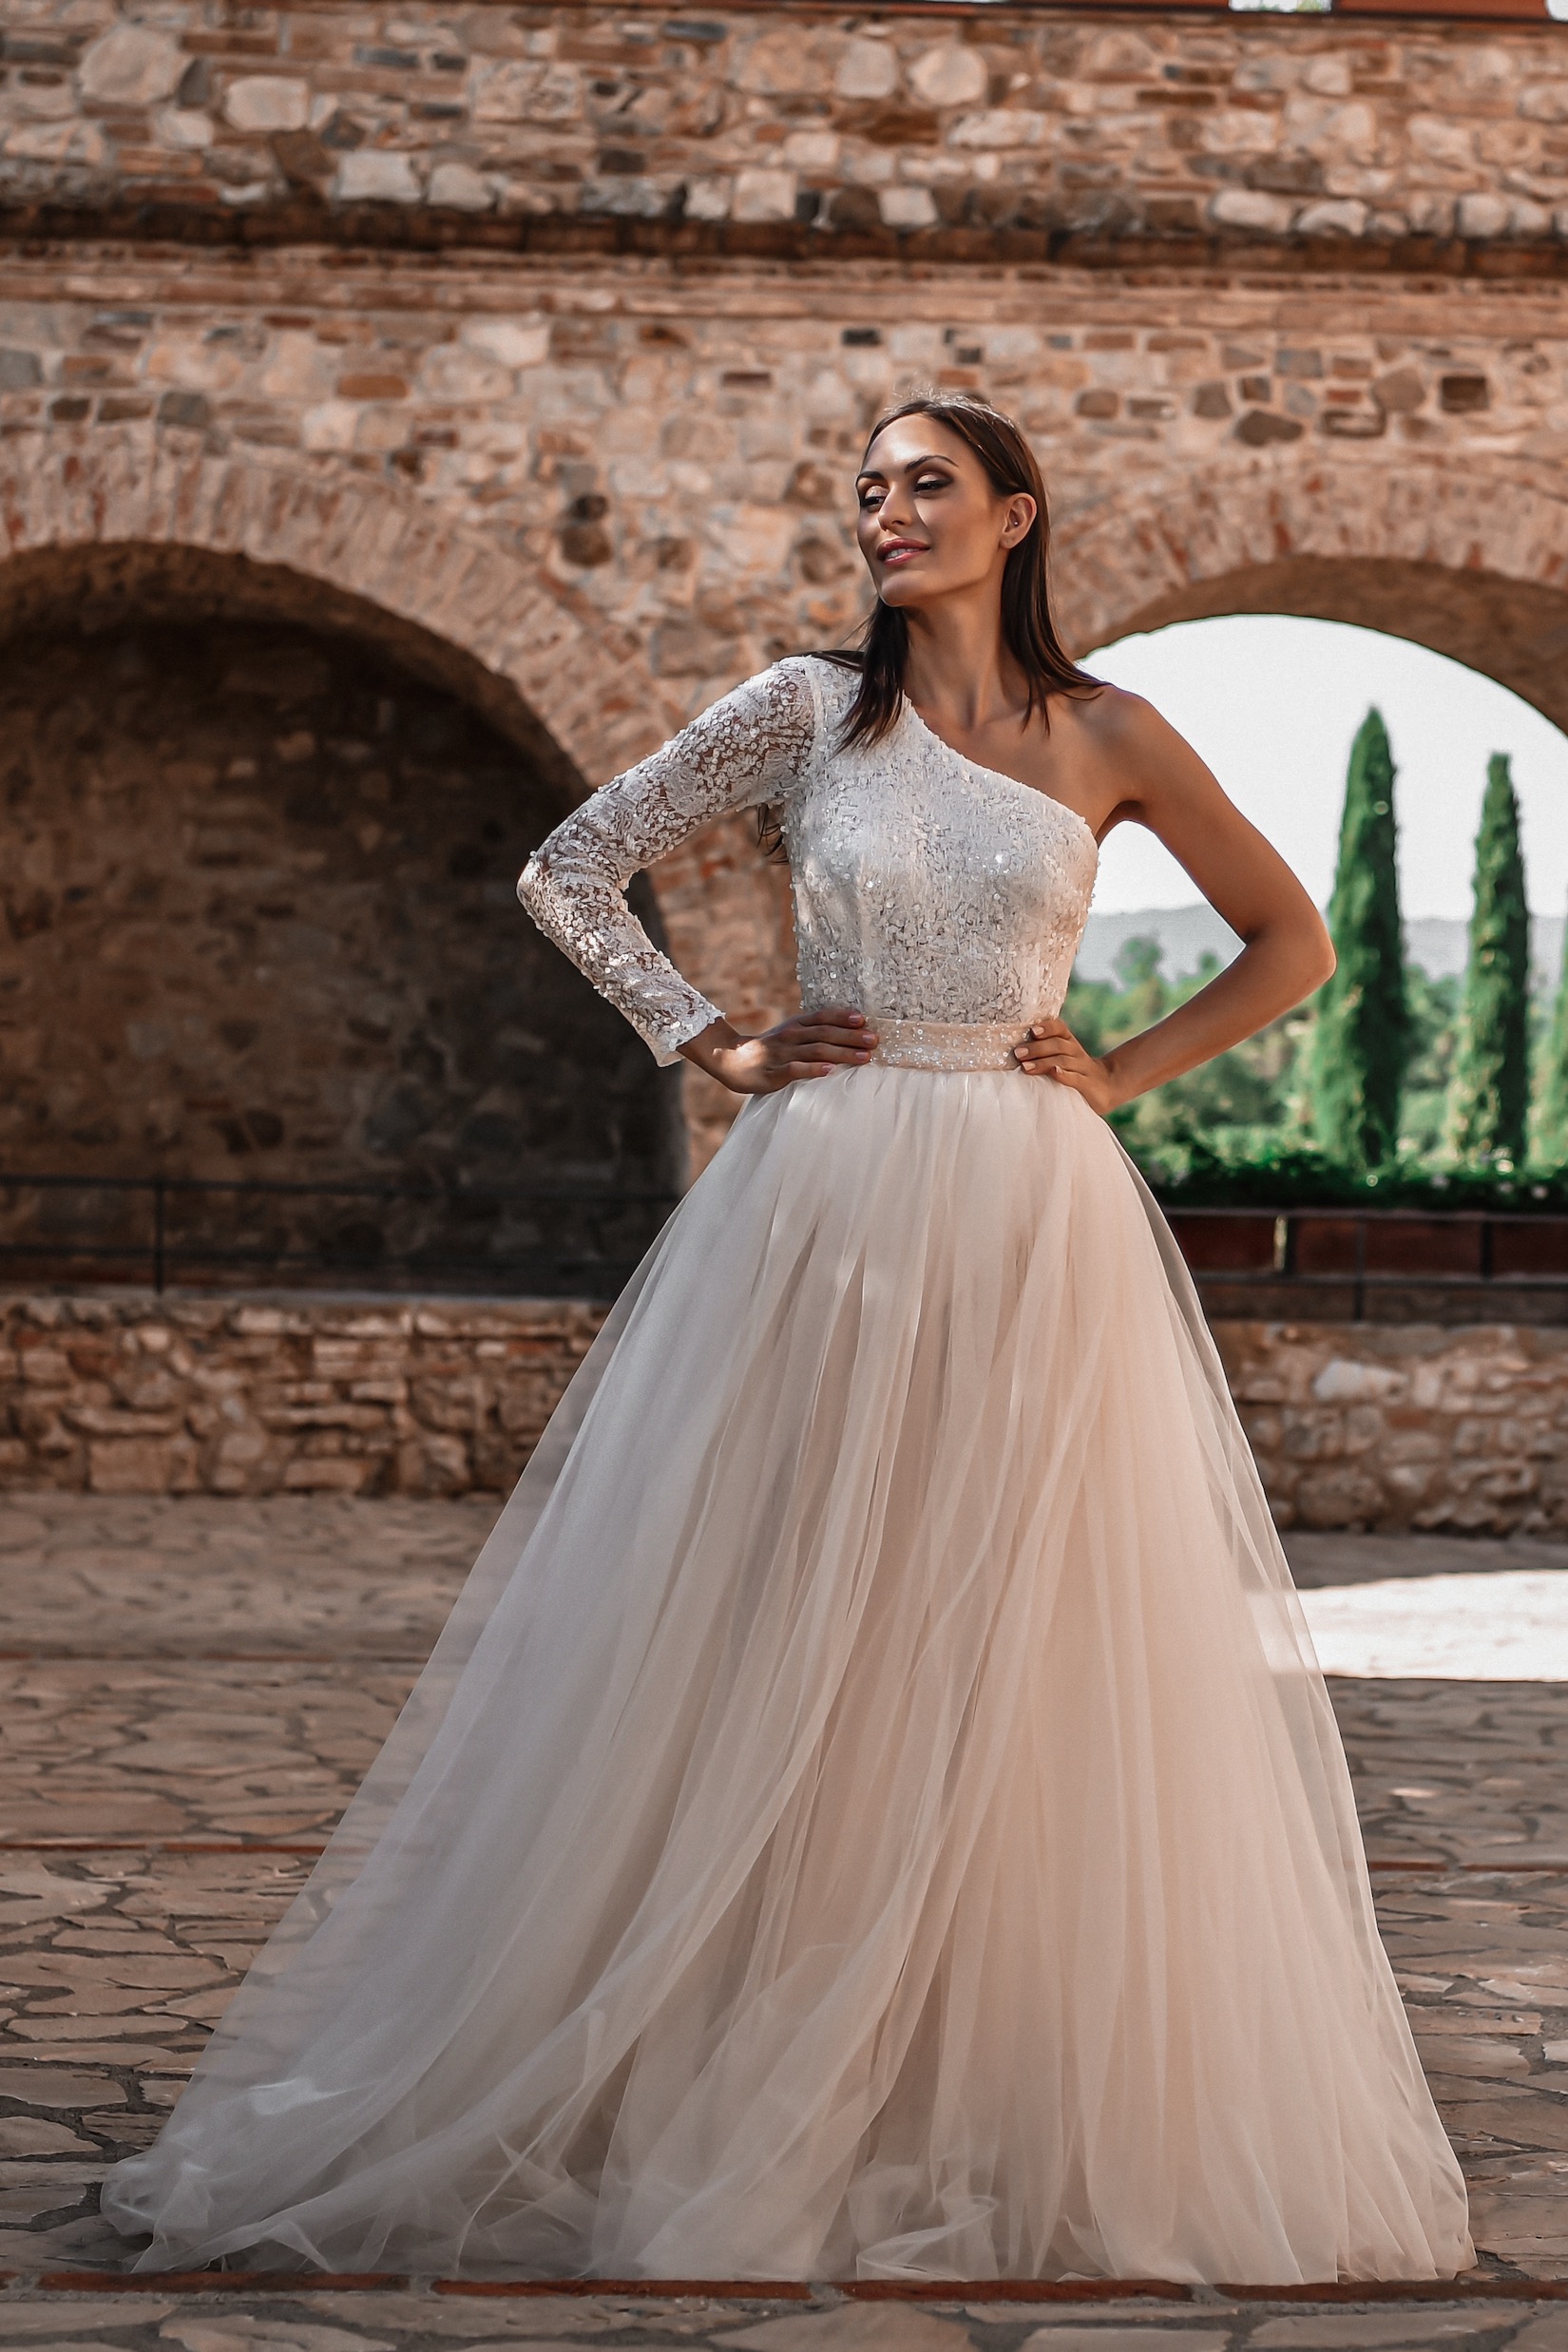 ORSOYA Bridal Dress: Single-sleeve design dress with detachable sleeve.